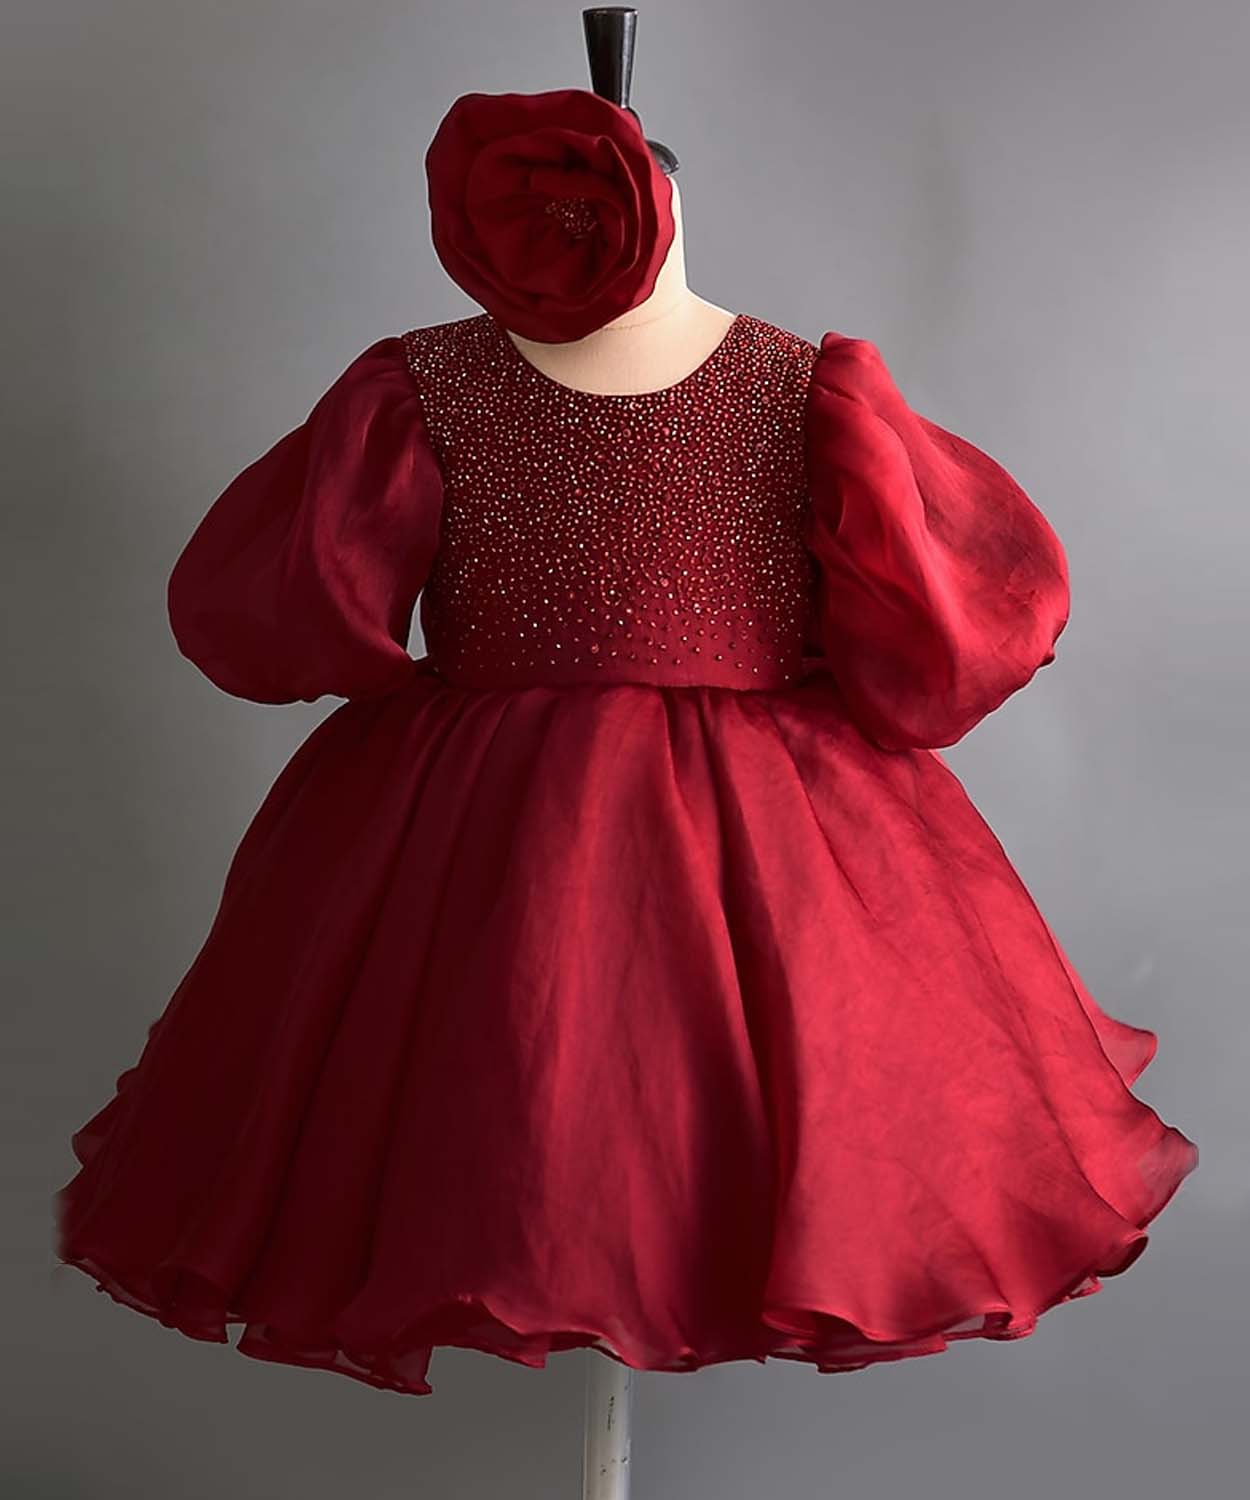 Red Riding Hood Dress